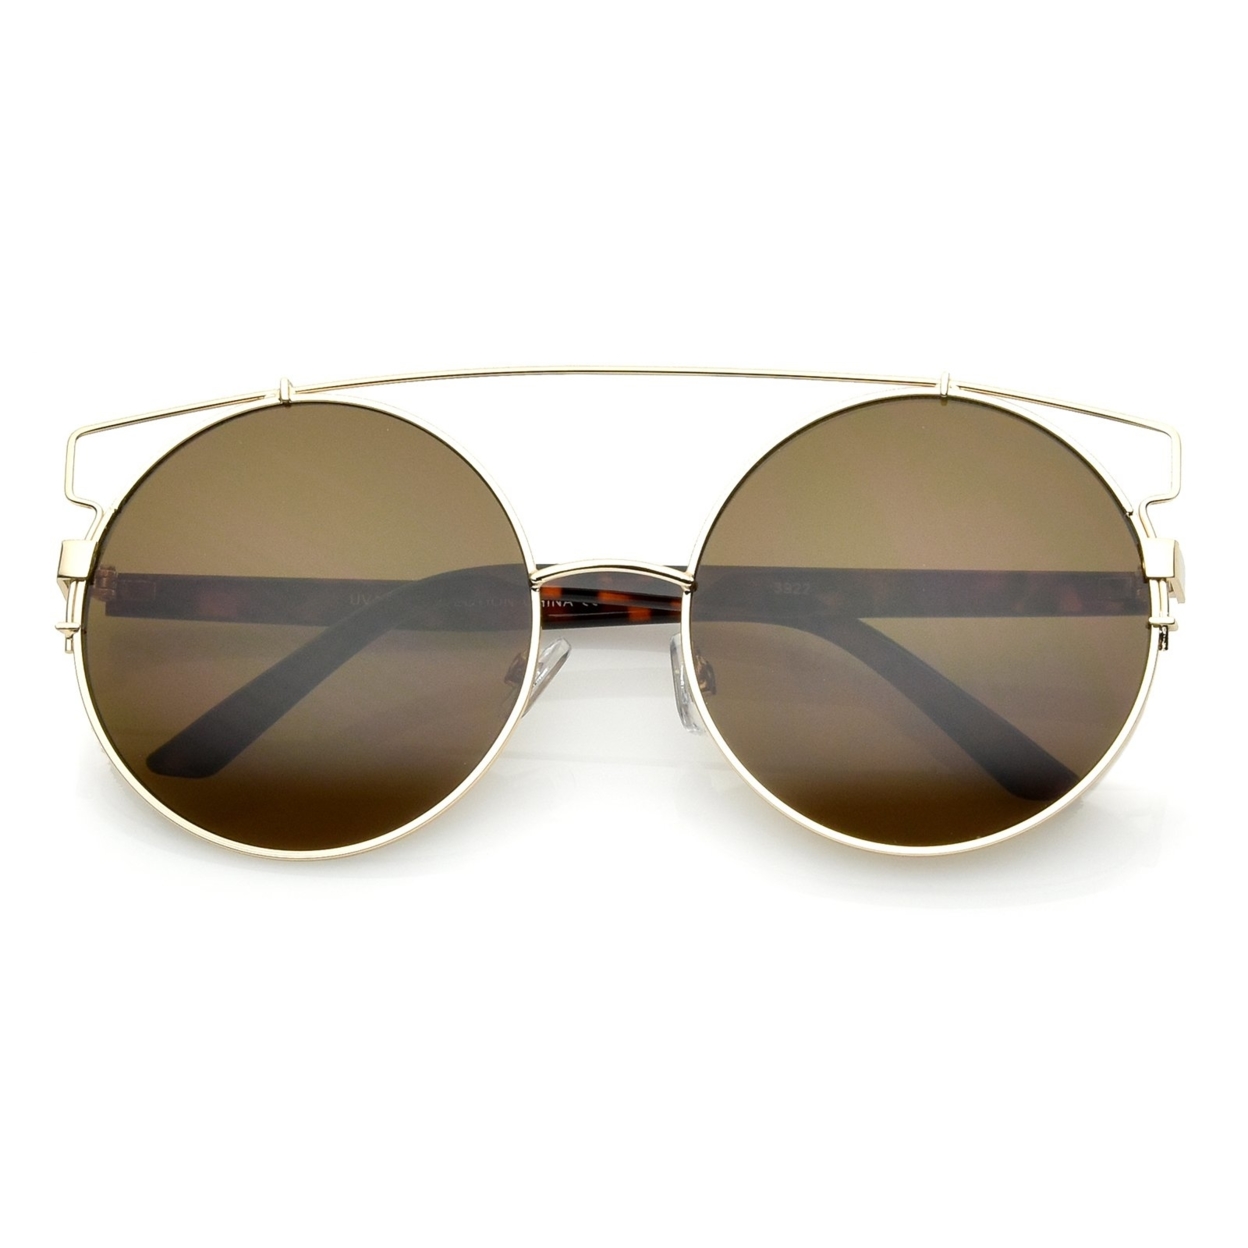 Oversize Open Metal Double Nose Bridge Round Flat Lens Aviator Sunglasses 53mm - Gold Black / Lavender